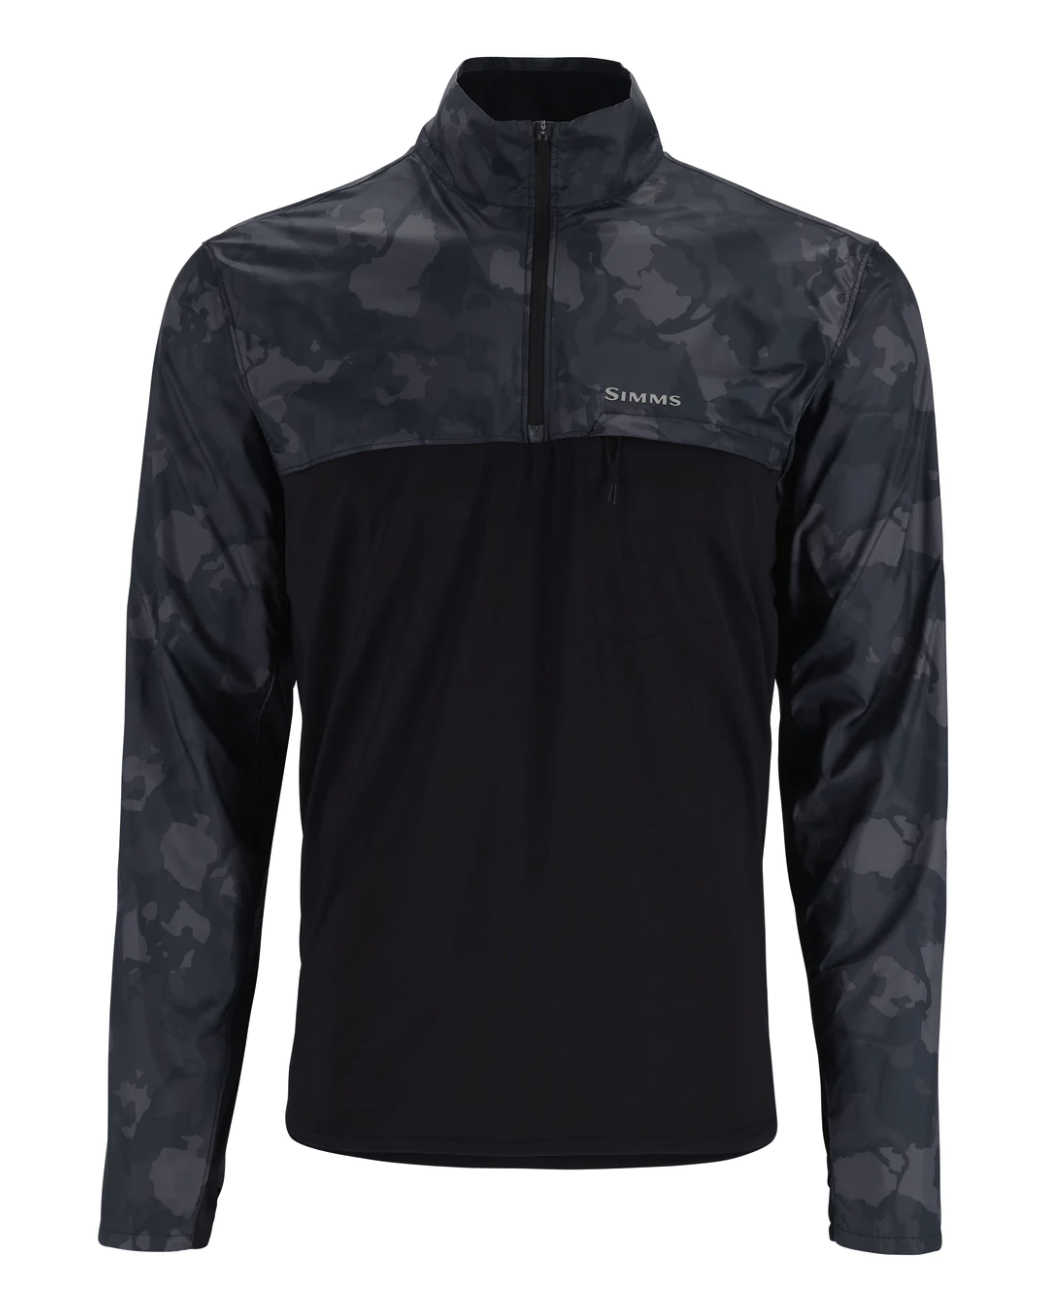 Simms SolarFlex Wind Half Zip Shirt Black Regiment Camo Carbon